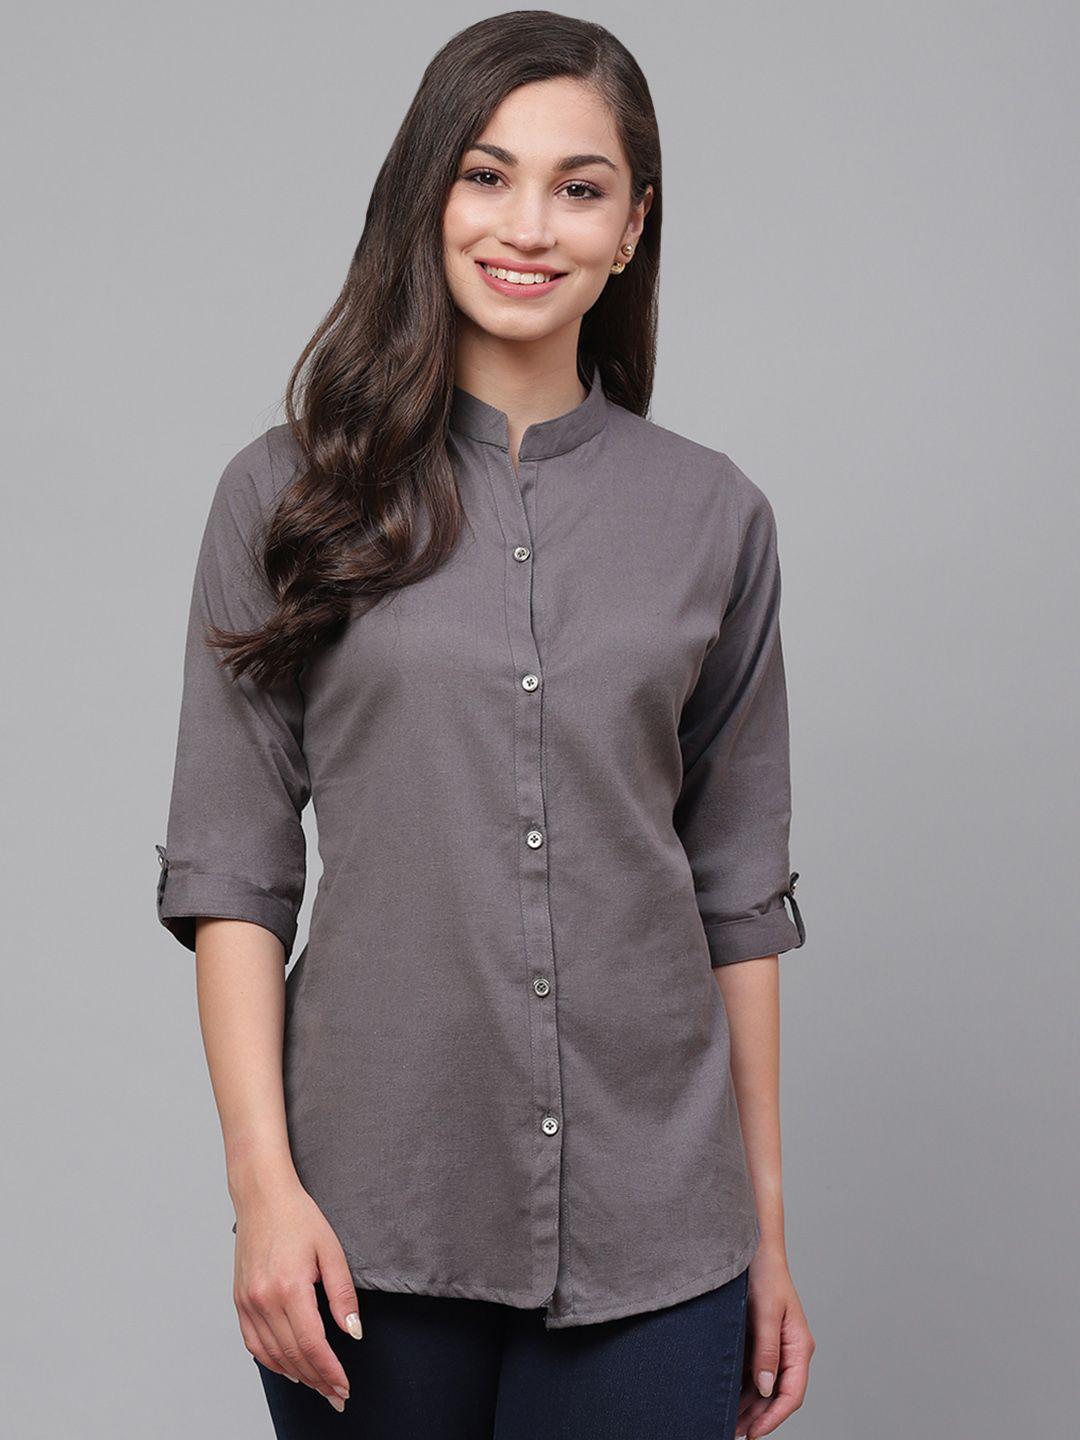 vastraa fusion women charcoal grey regular fit solid casual shirt